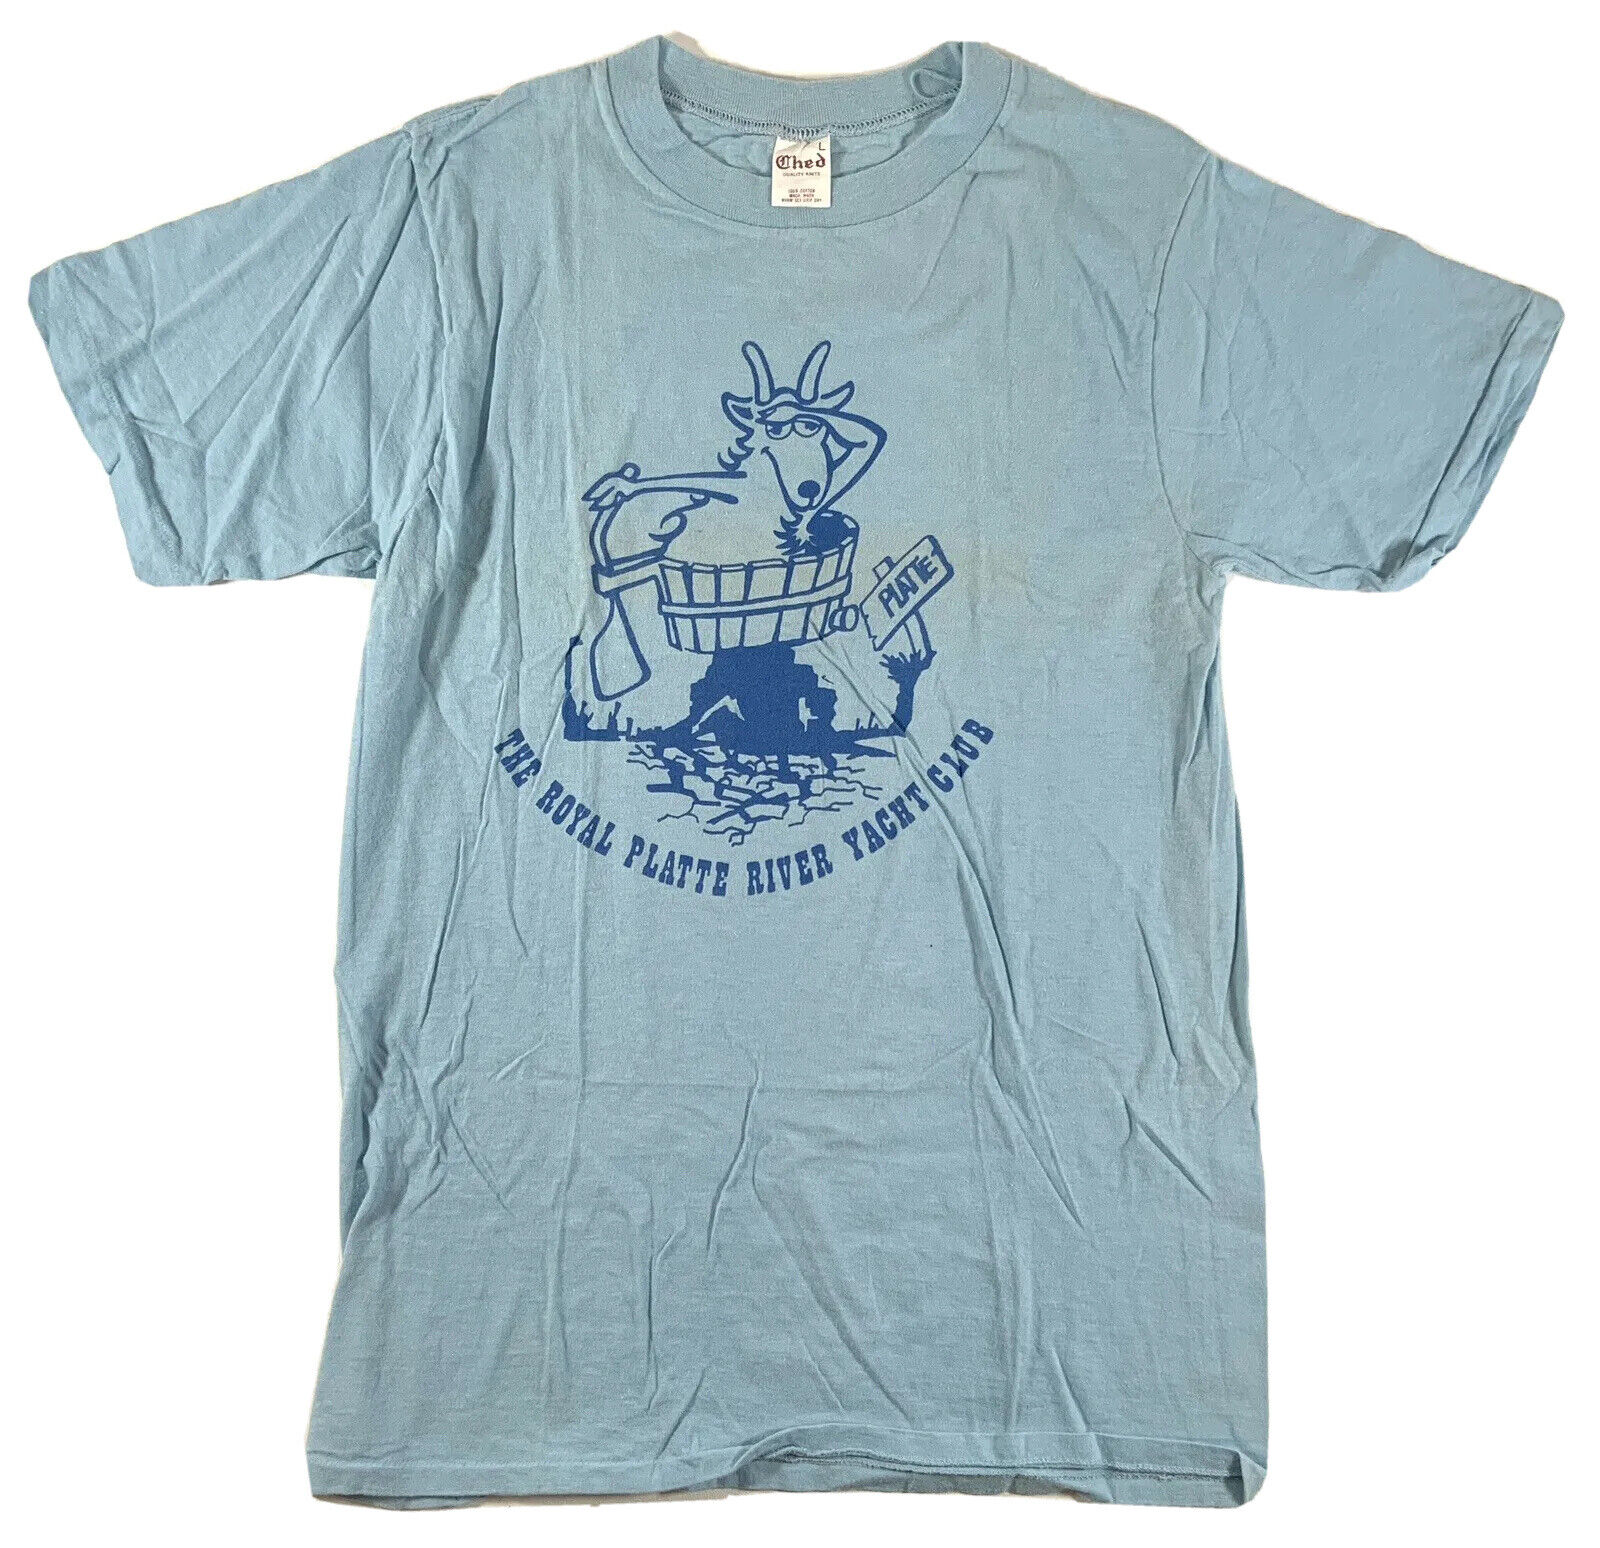 Vintage 90s The Royal Platte River Yacht Club Nebraska T Shirt Size L Blue Print